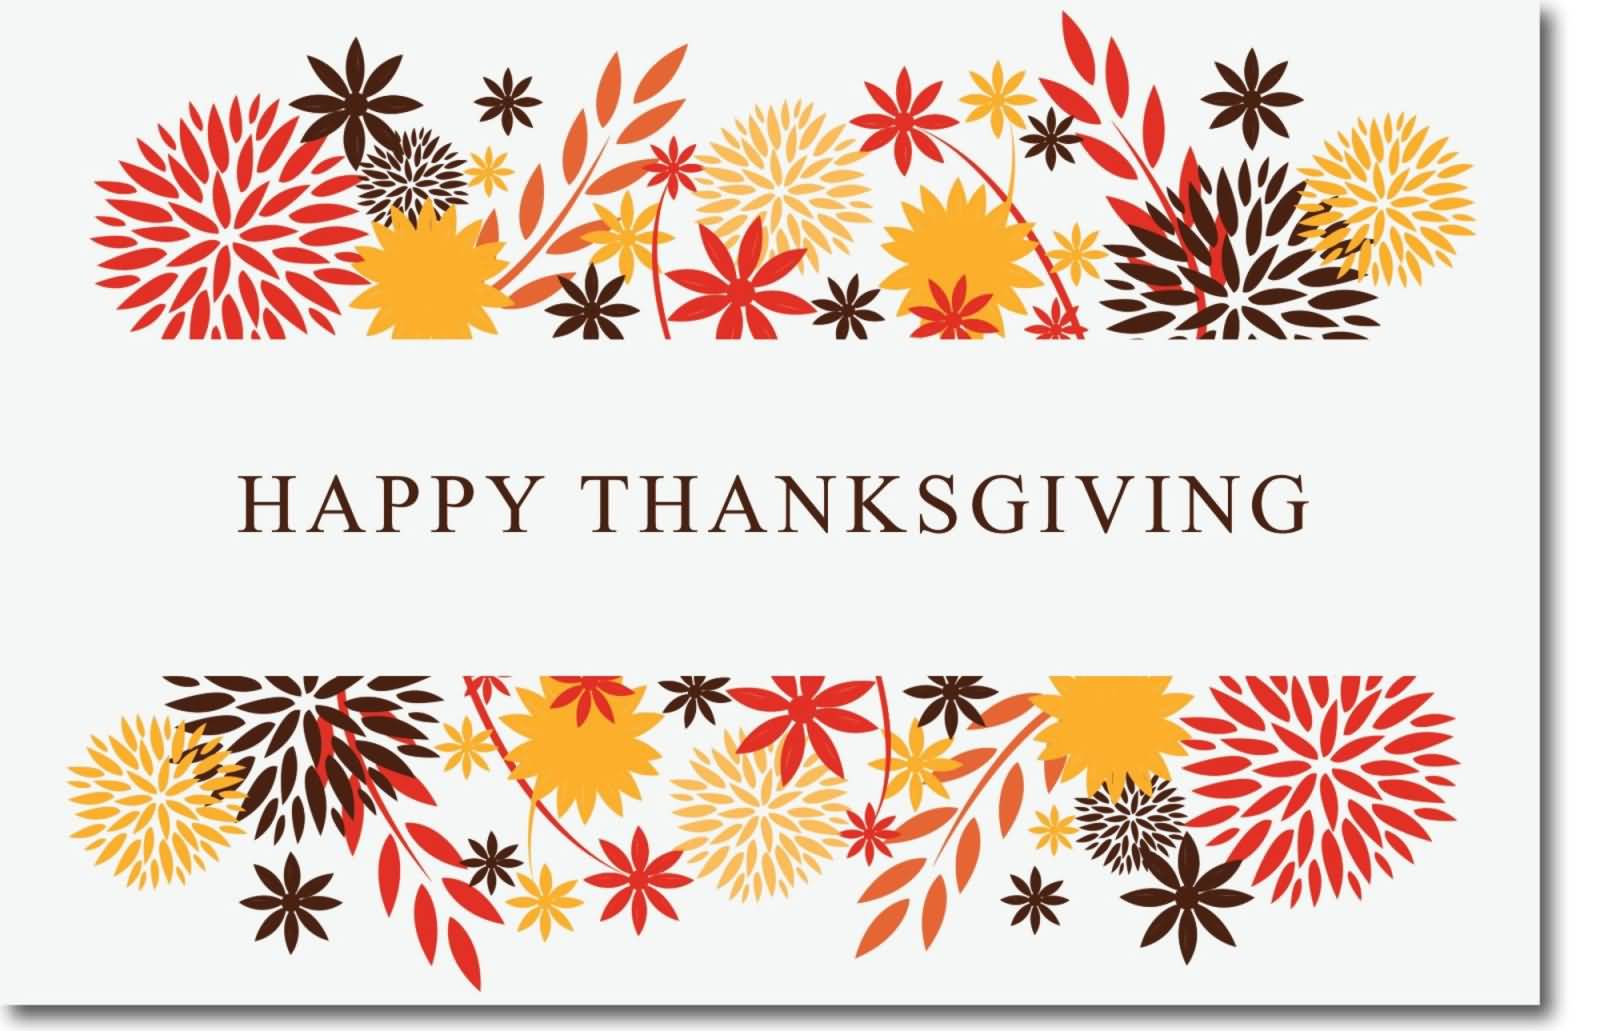 Happy Thanksgiving Beautiful greeting Card